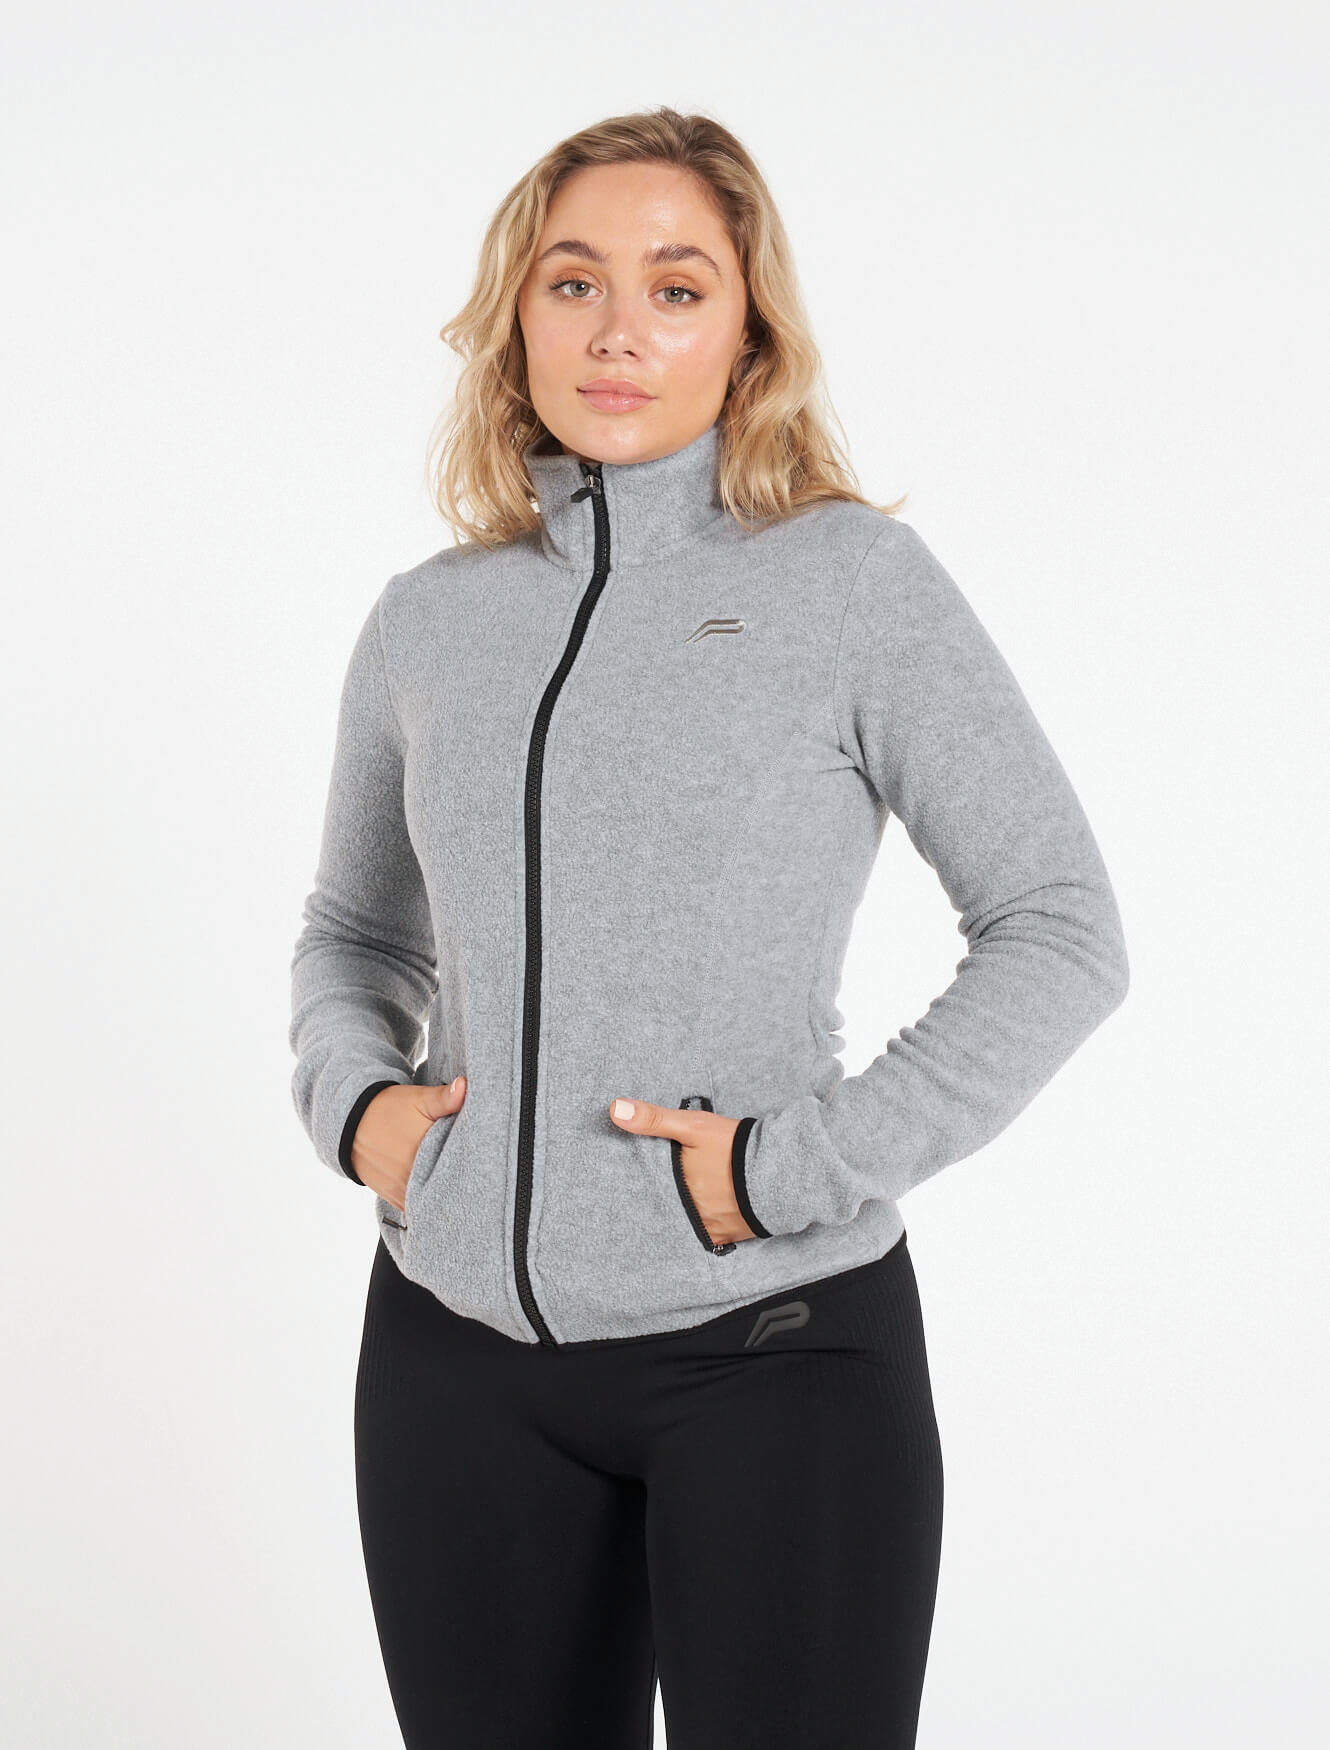 Explore Full-Zip Jacket / Grey Marl Pursue Fitness 2